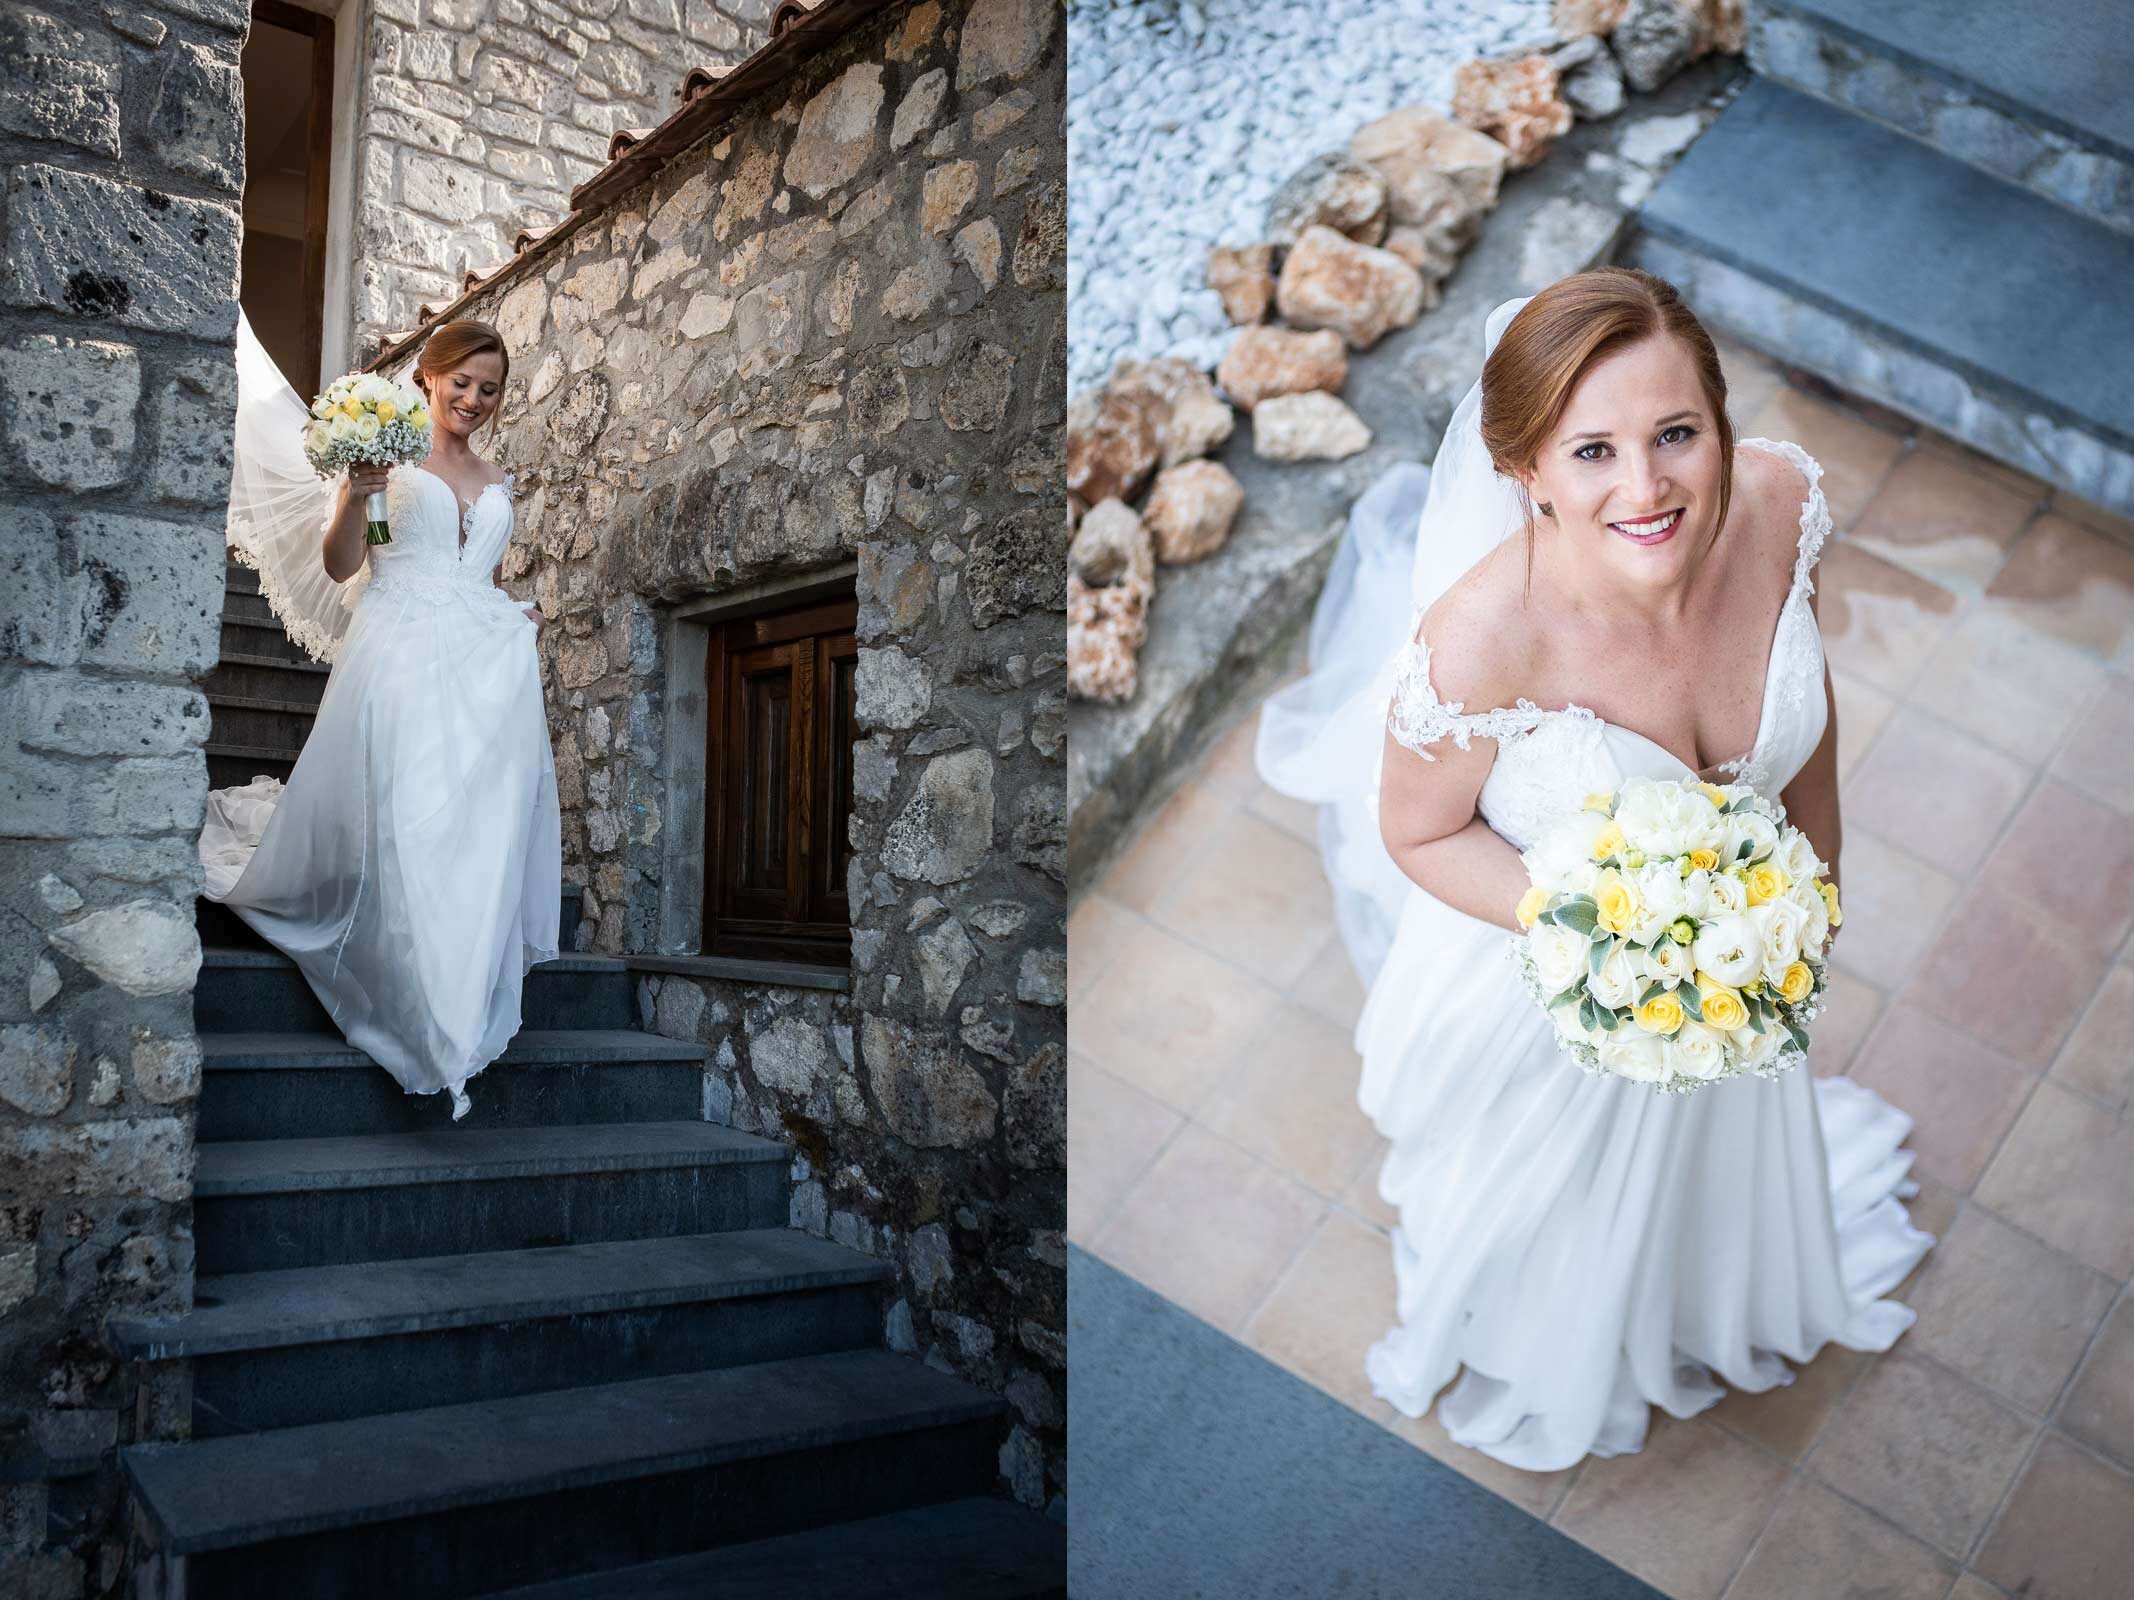 00003-Fotografo-Matrimonio-VicoEquense-fotografo-Sorrento-Napoli-Wedding-Amalfi-Coast-Photographer-VincentAiello.jpg